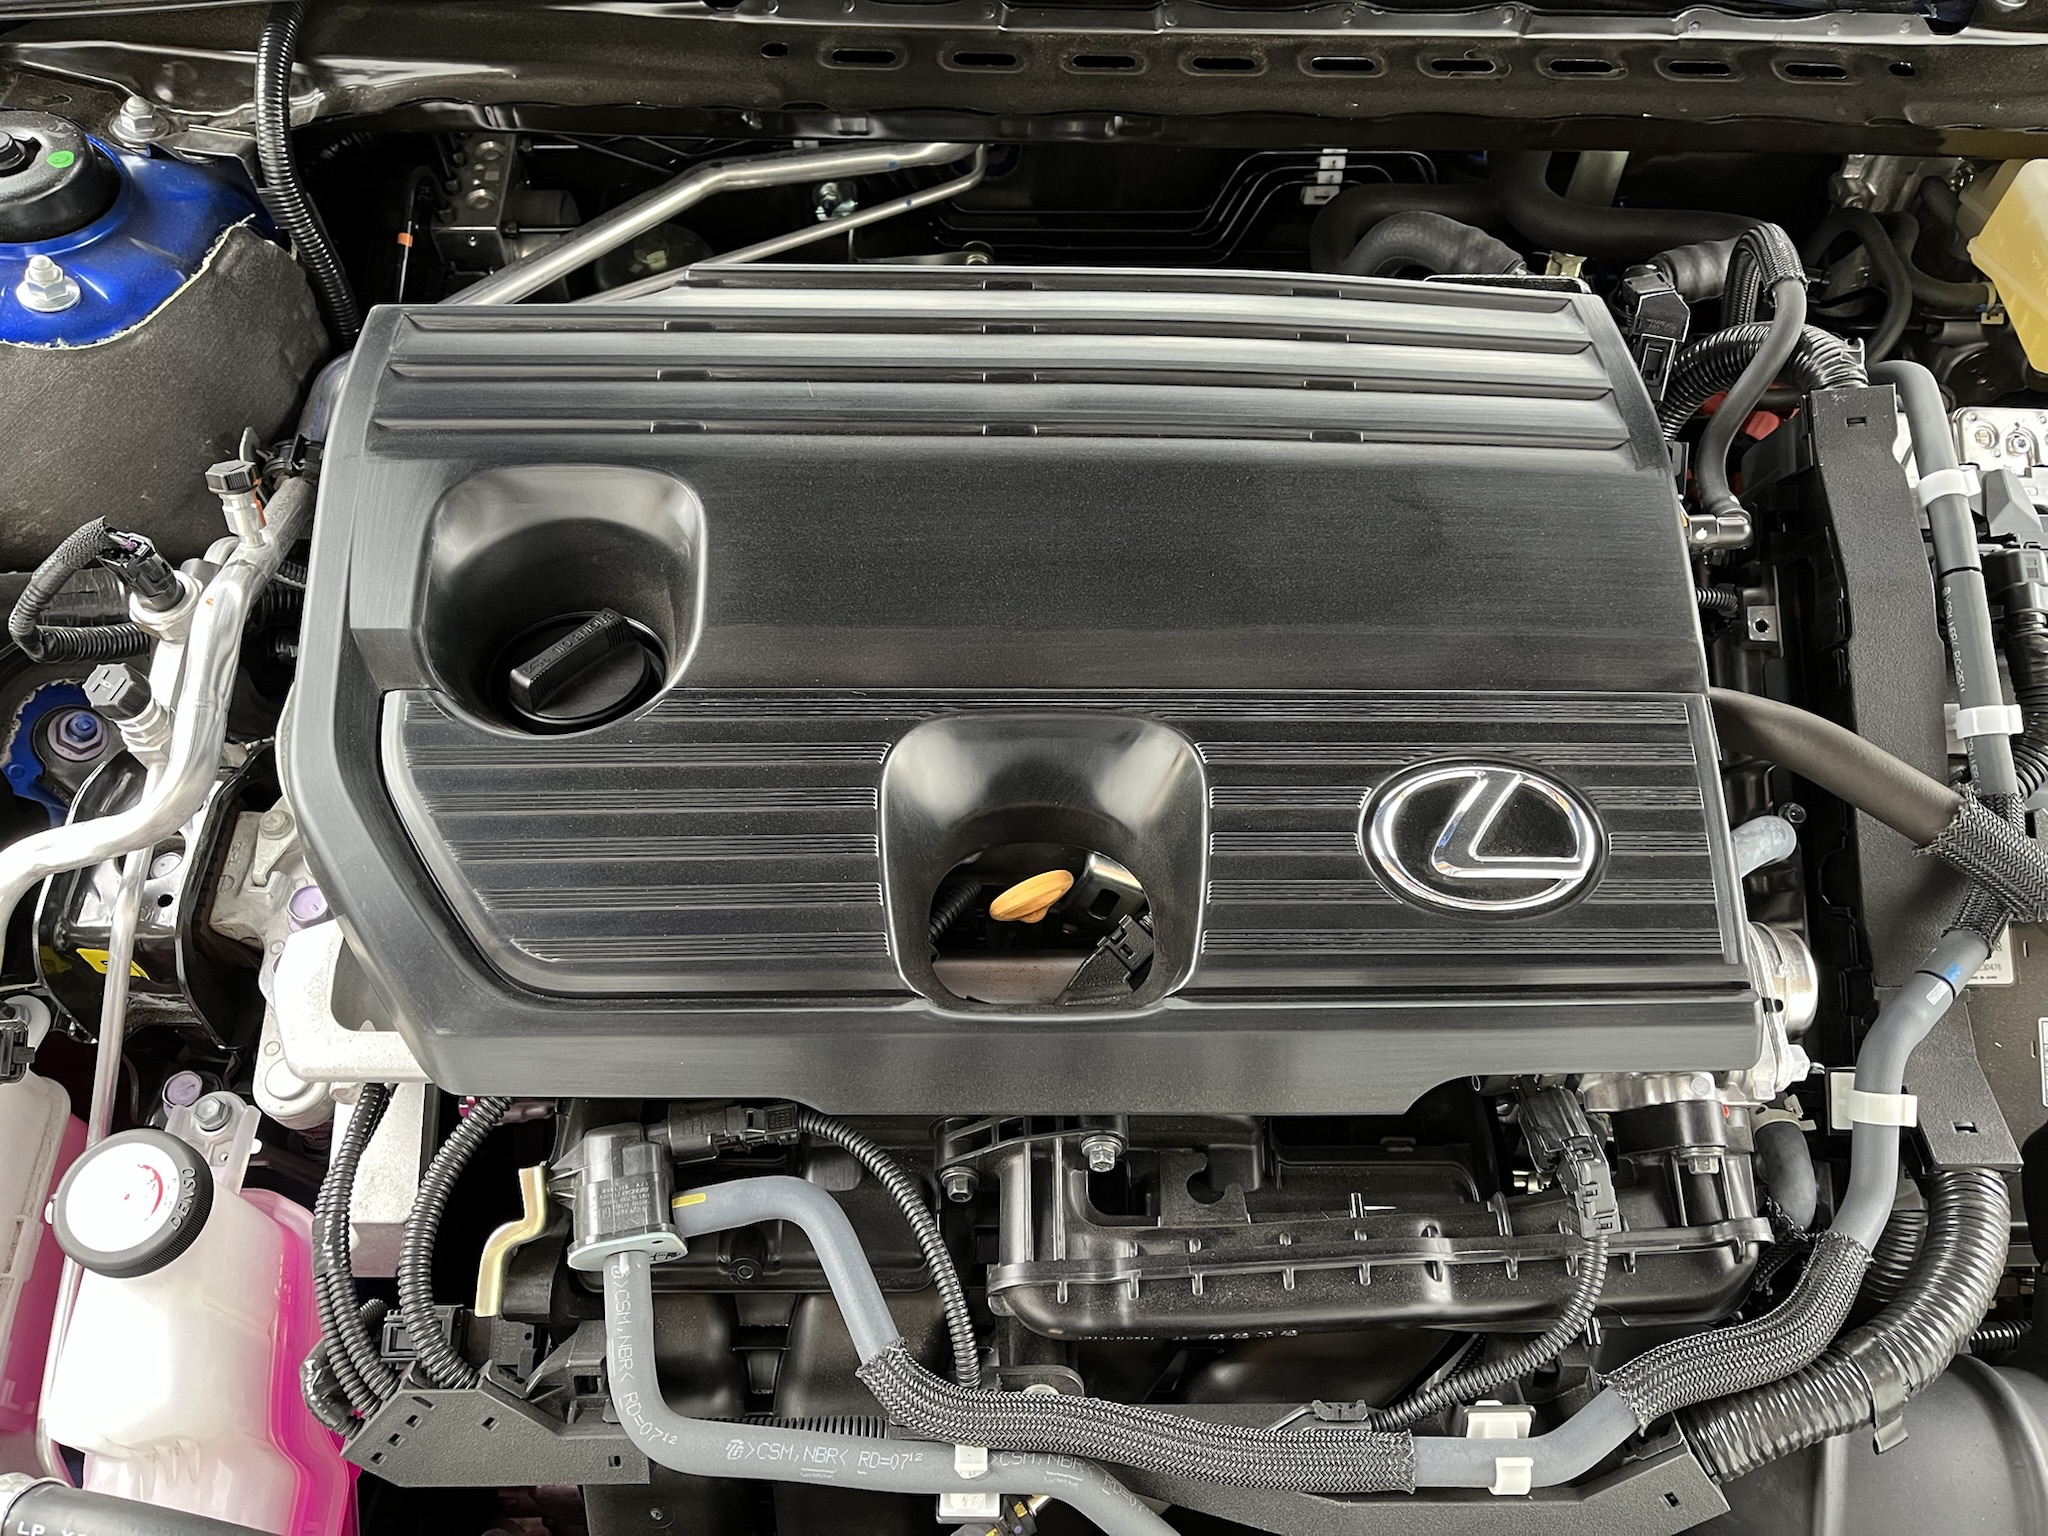 The hybrid engine of the Lexus ES 300h